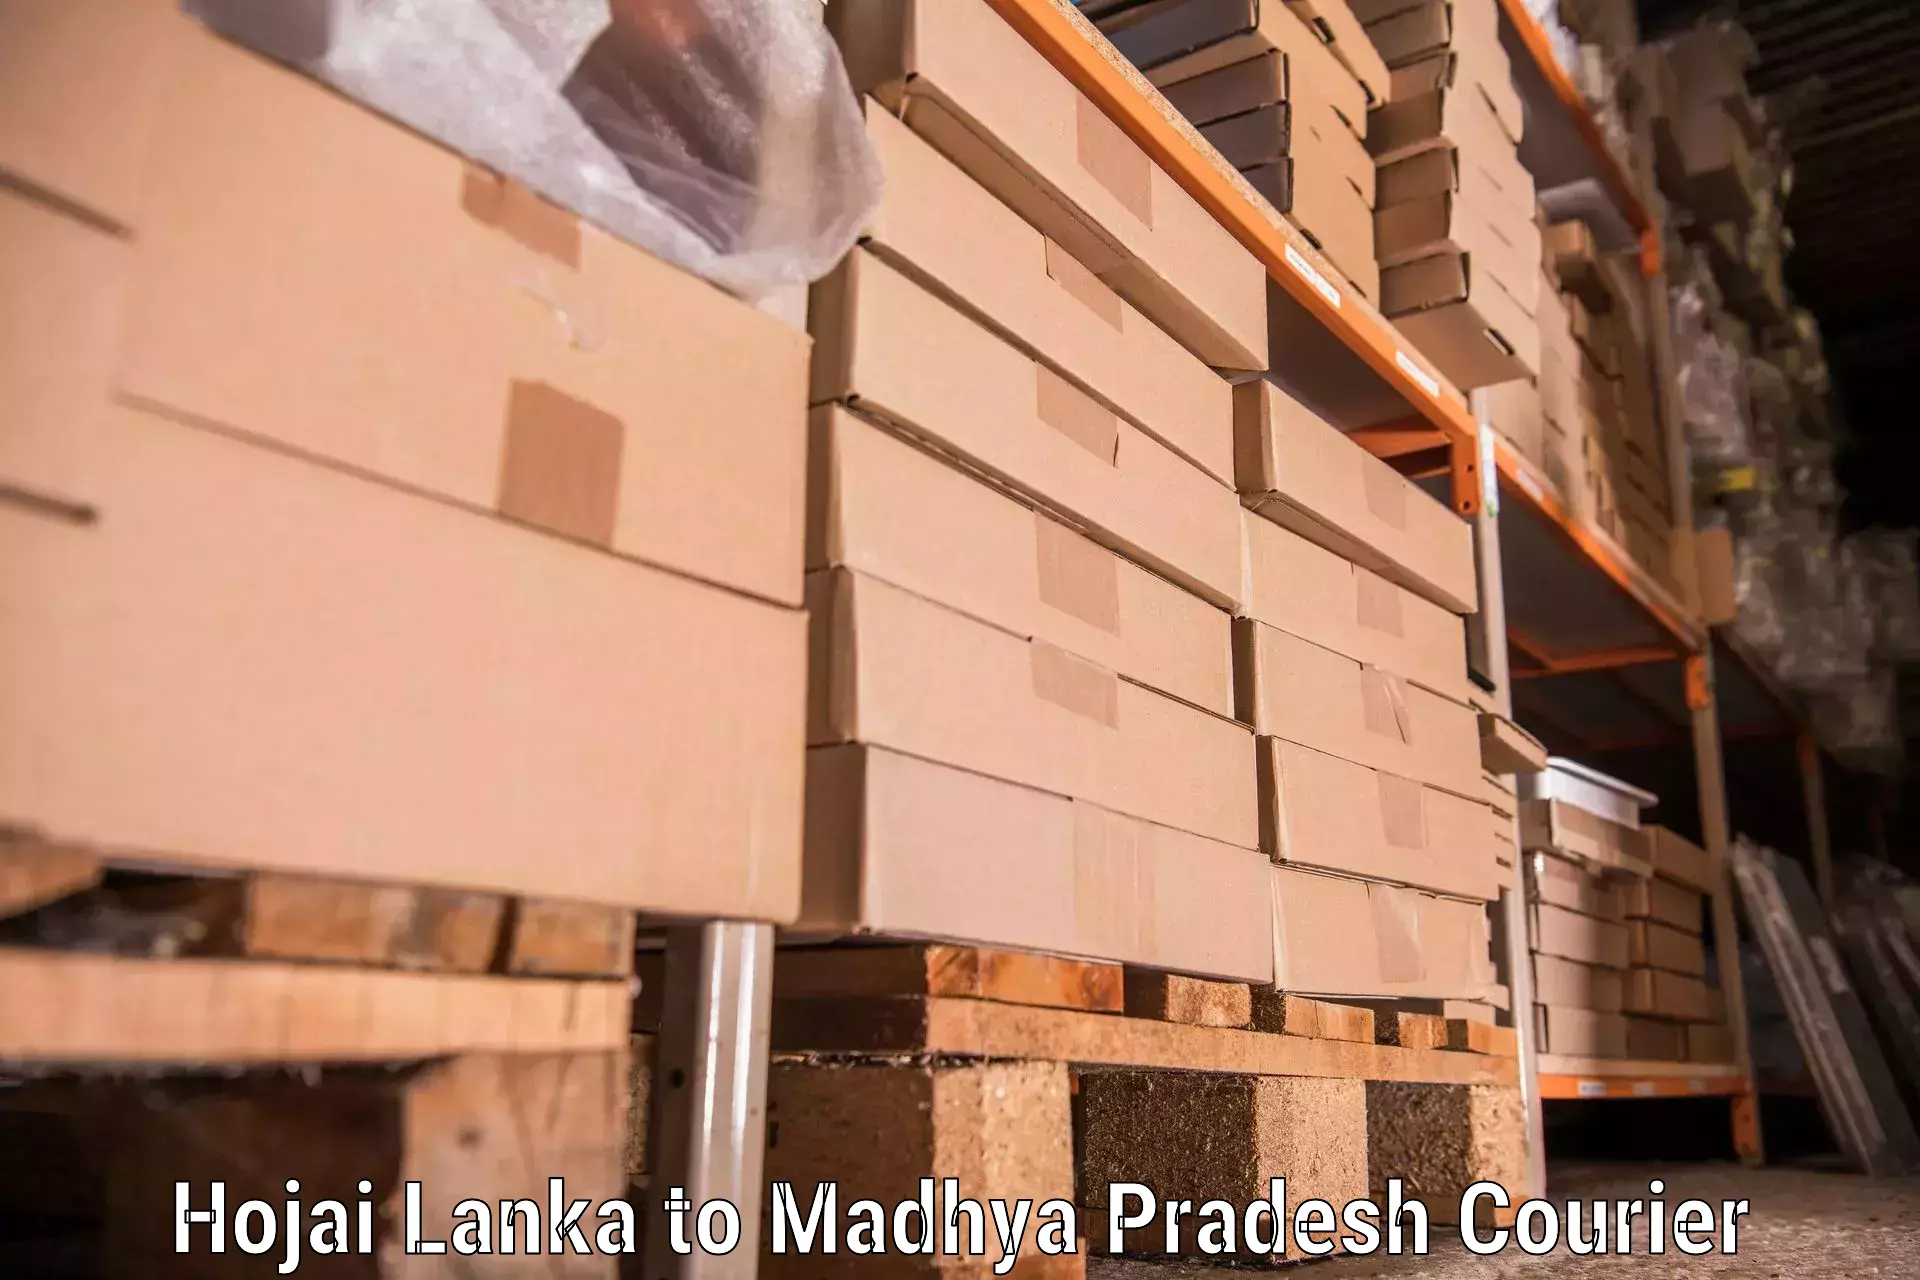 Dependable furniture movers Hojai Lanka to Agar